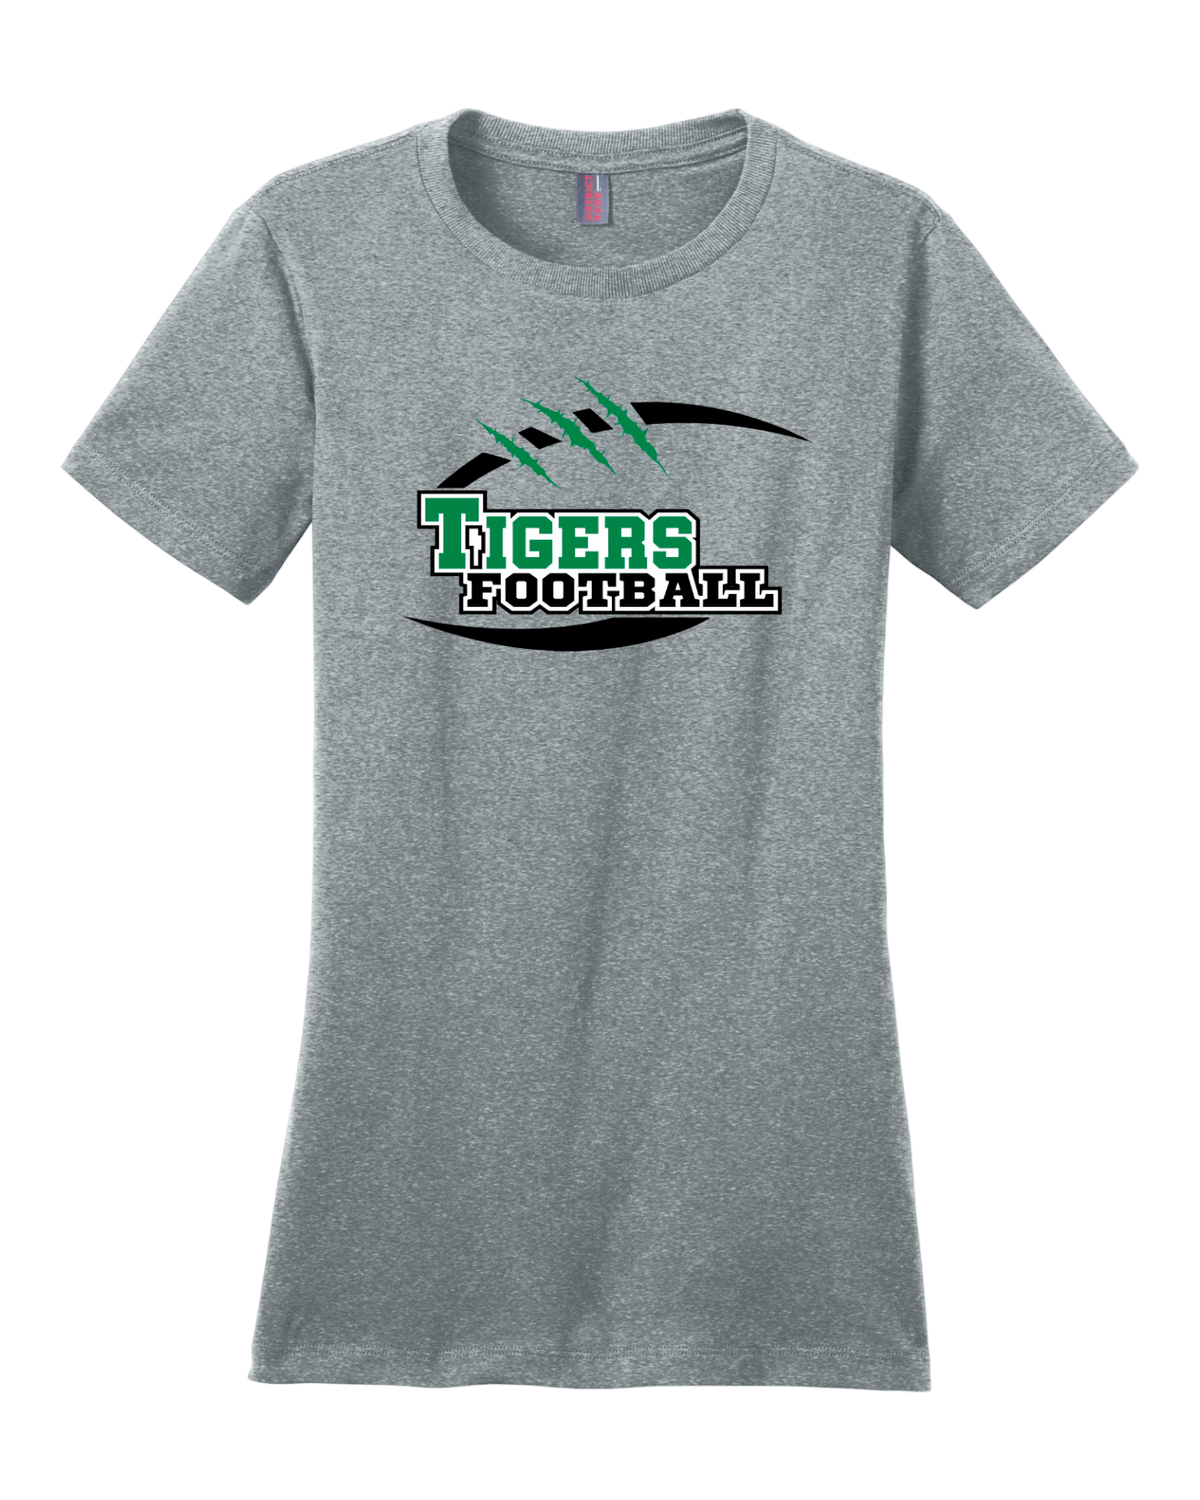 Tigers Football Shirt